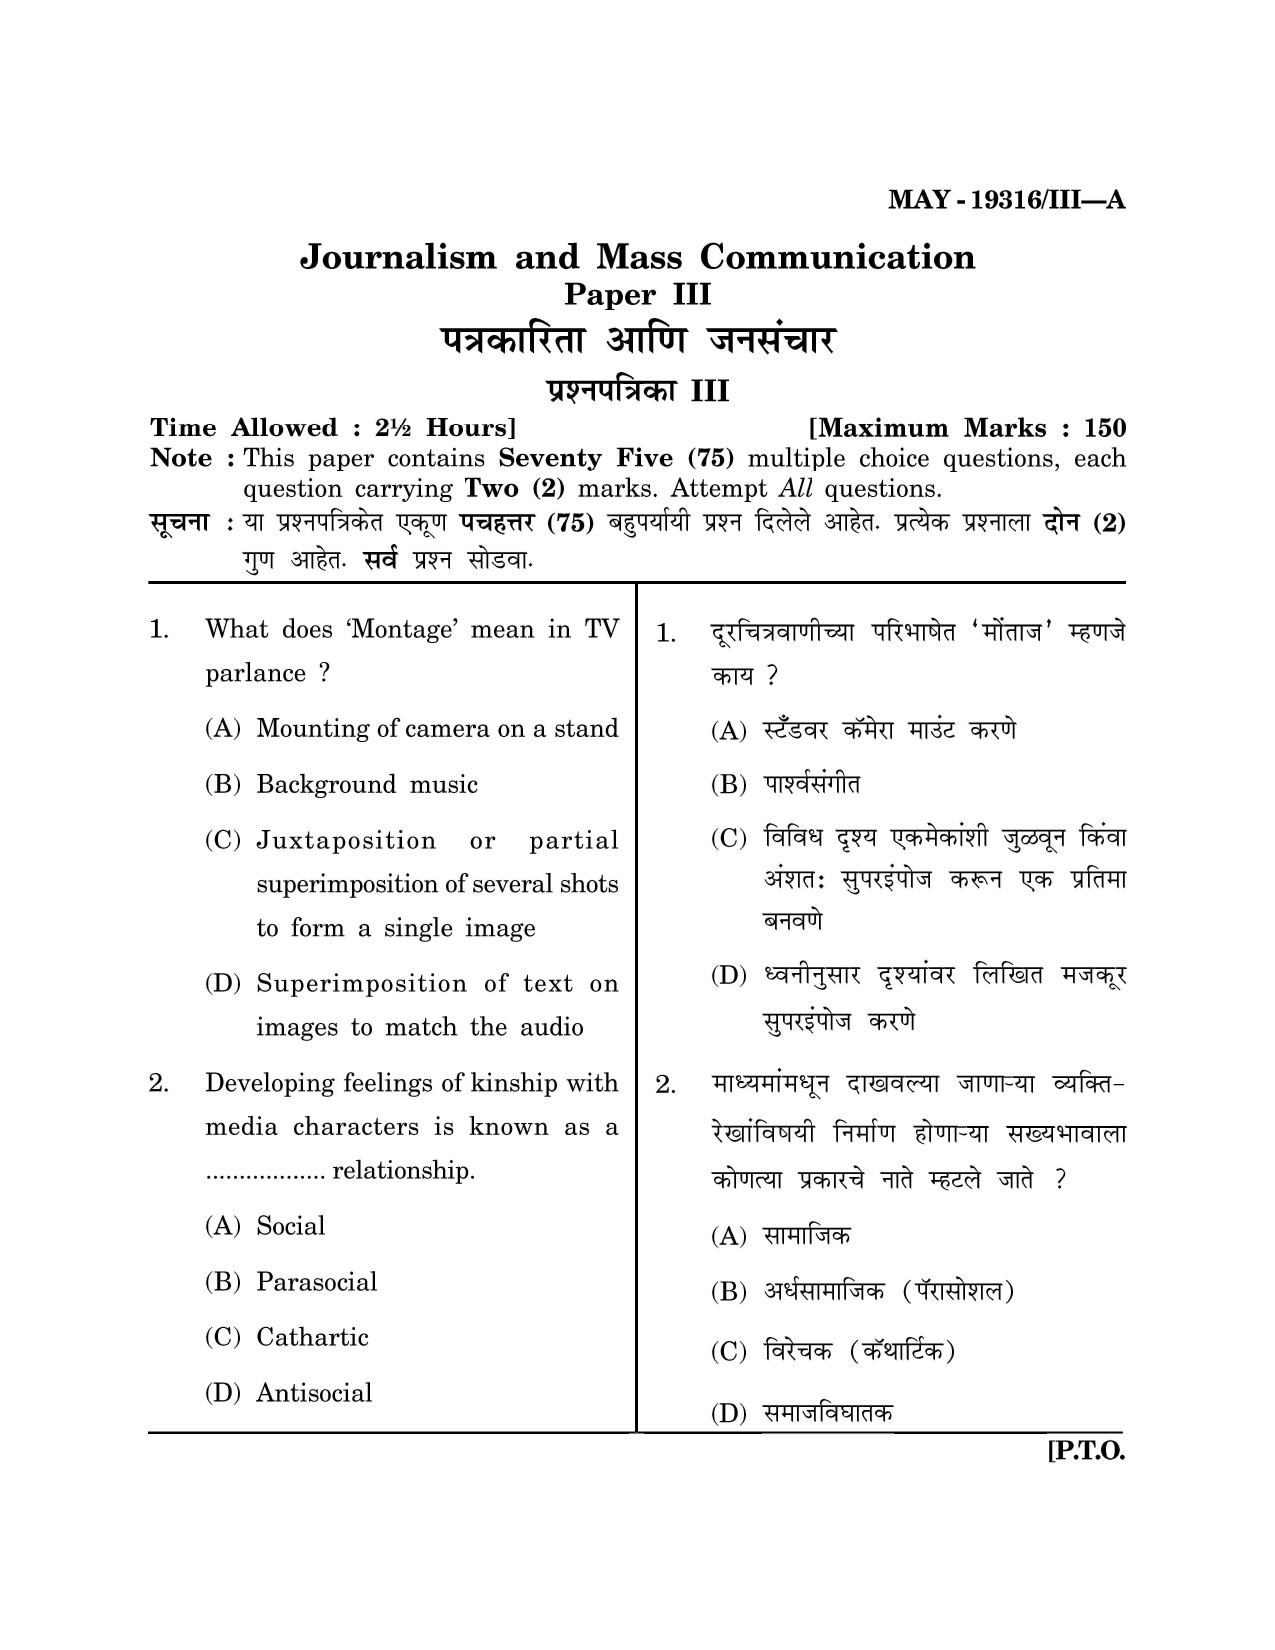 Maharashtra SET Journalism and Mass Communication Question Paper III May 2016 2